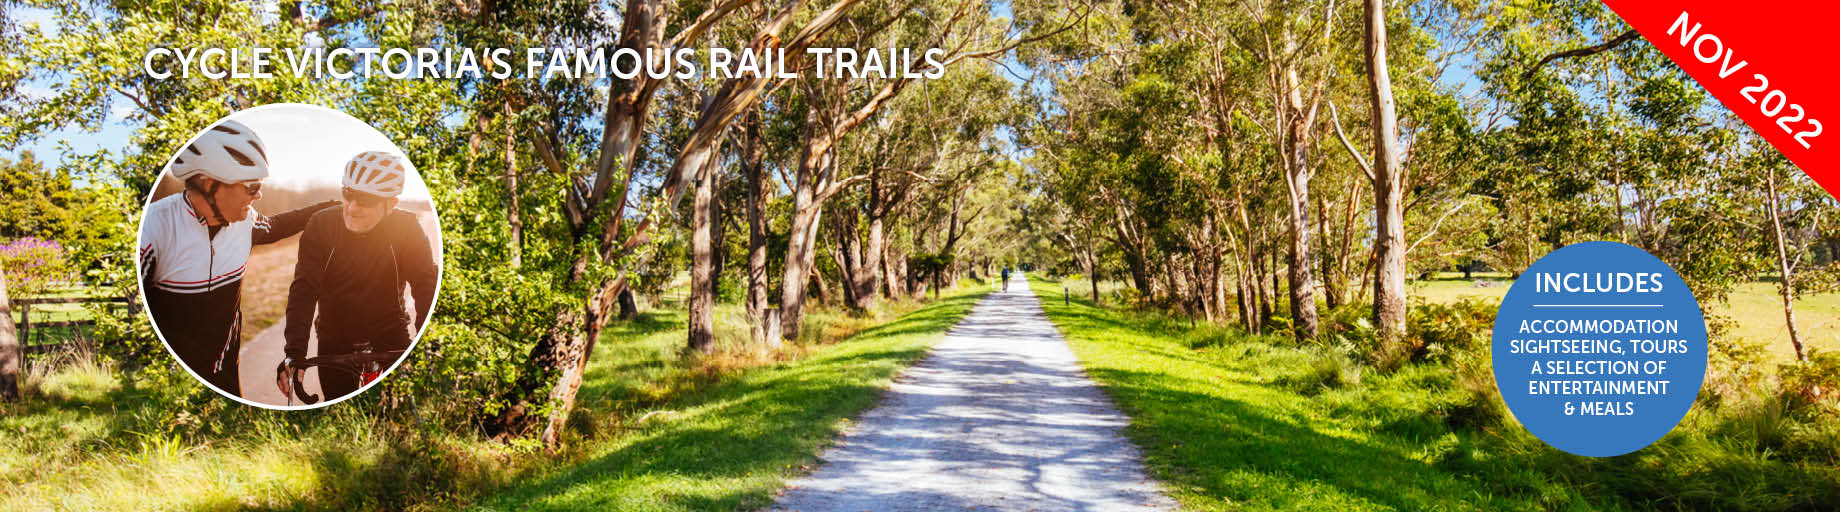 Cycle Victoria’s Famous Rail Trails